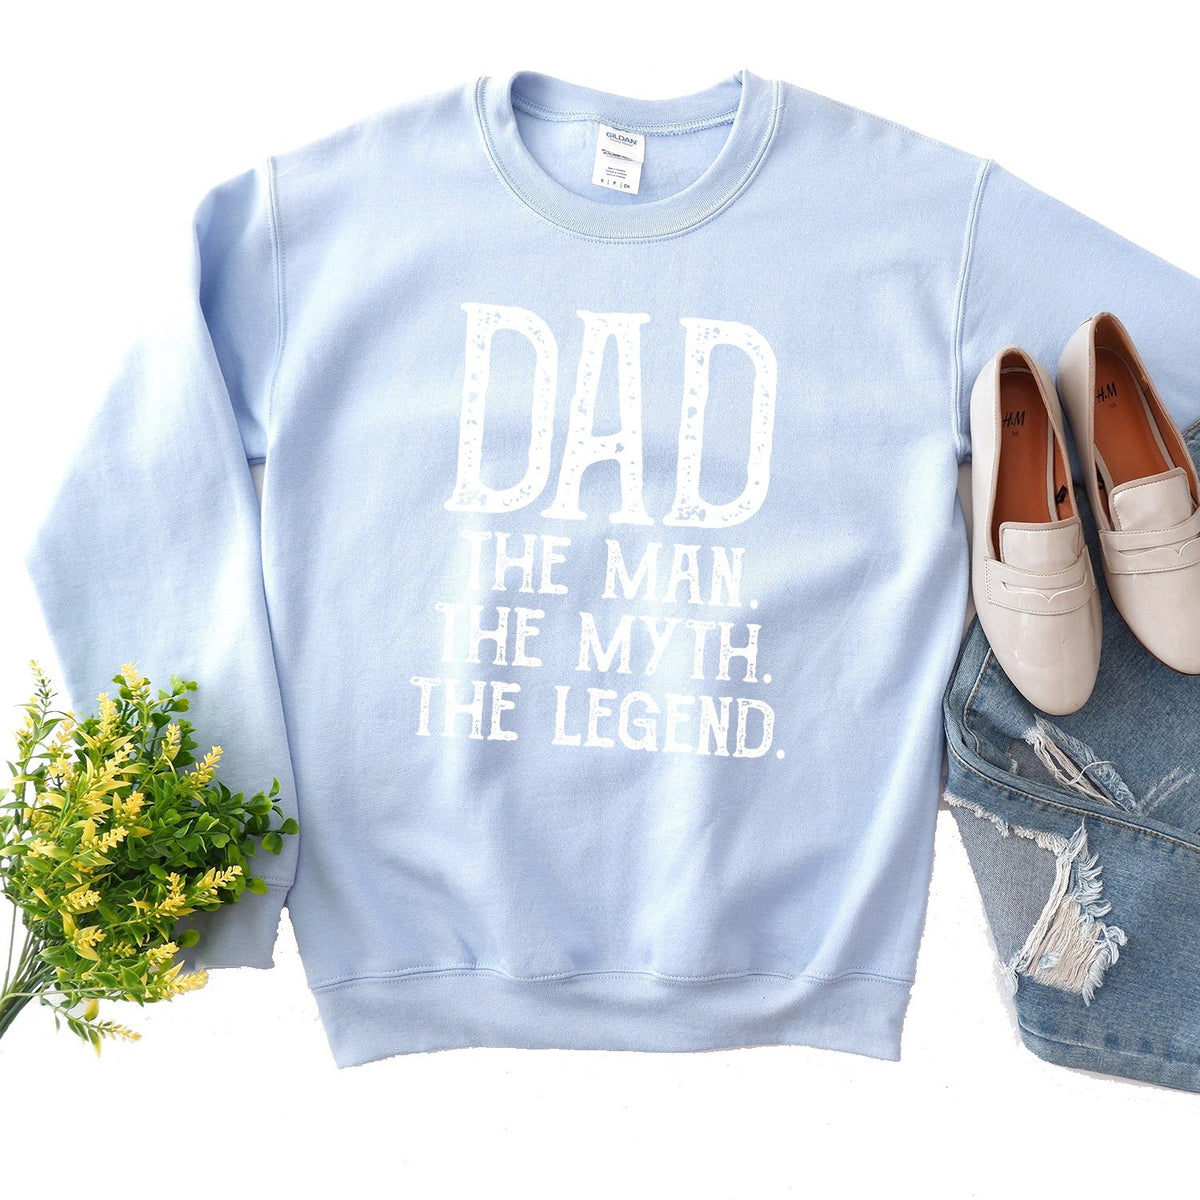 DAD The Man The Myth The Legend - Long Sleeve Heavy Crewneck Sweatshirt